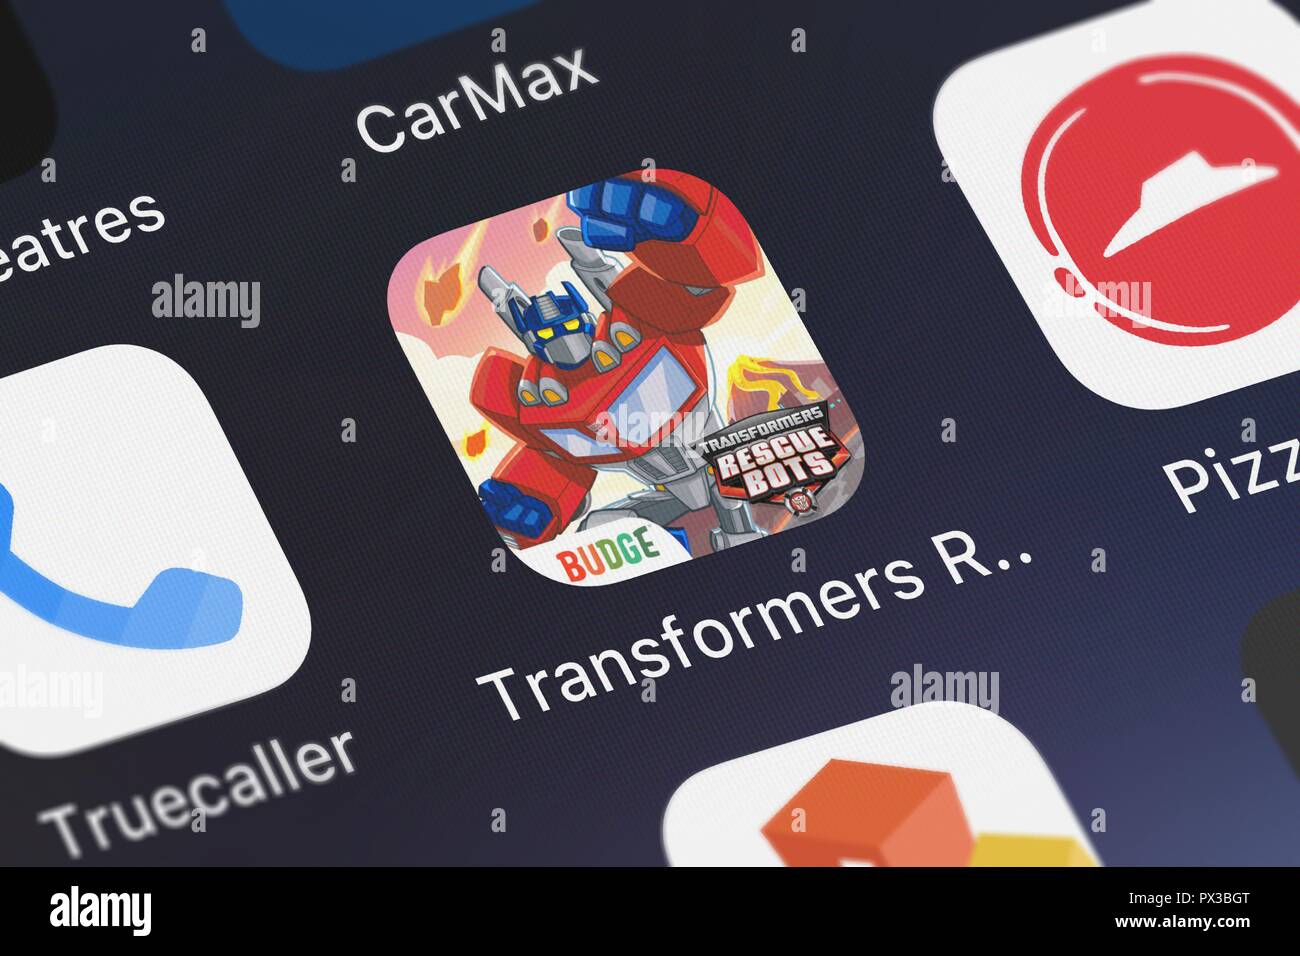 Transformers Rescue Bots: Dash – Apps no Google Play